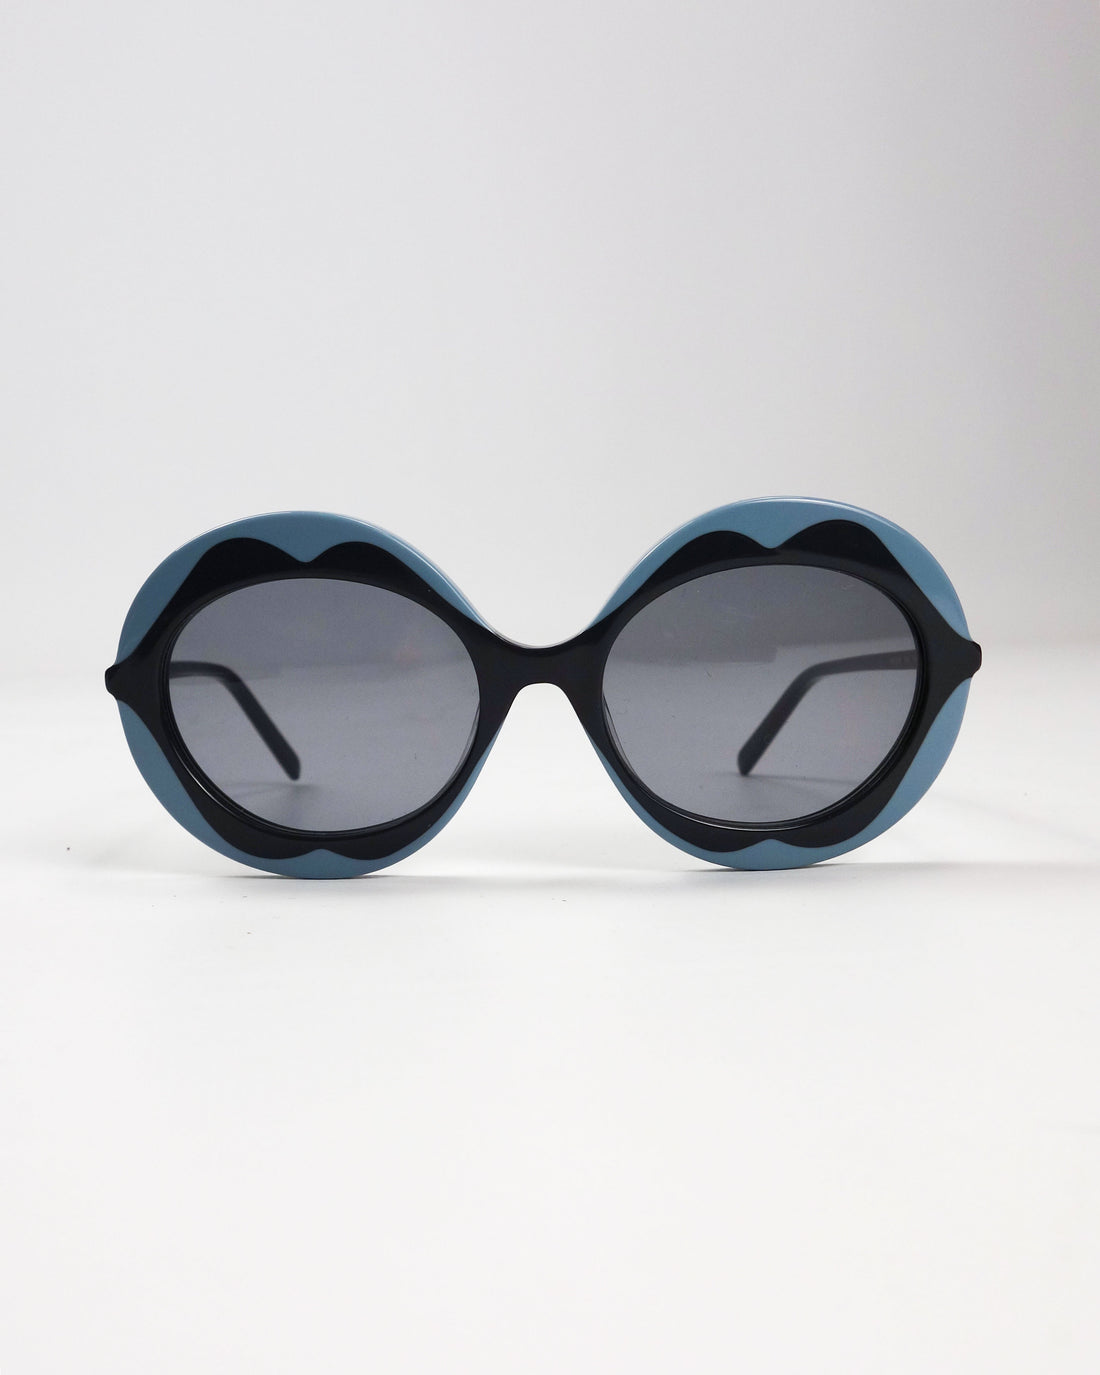 Marni Blue Lips Sunglasses 2000's